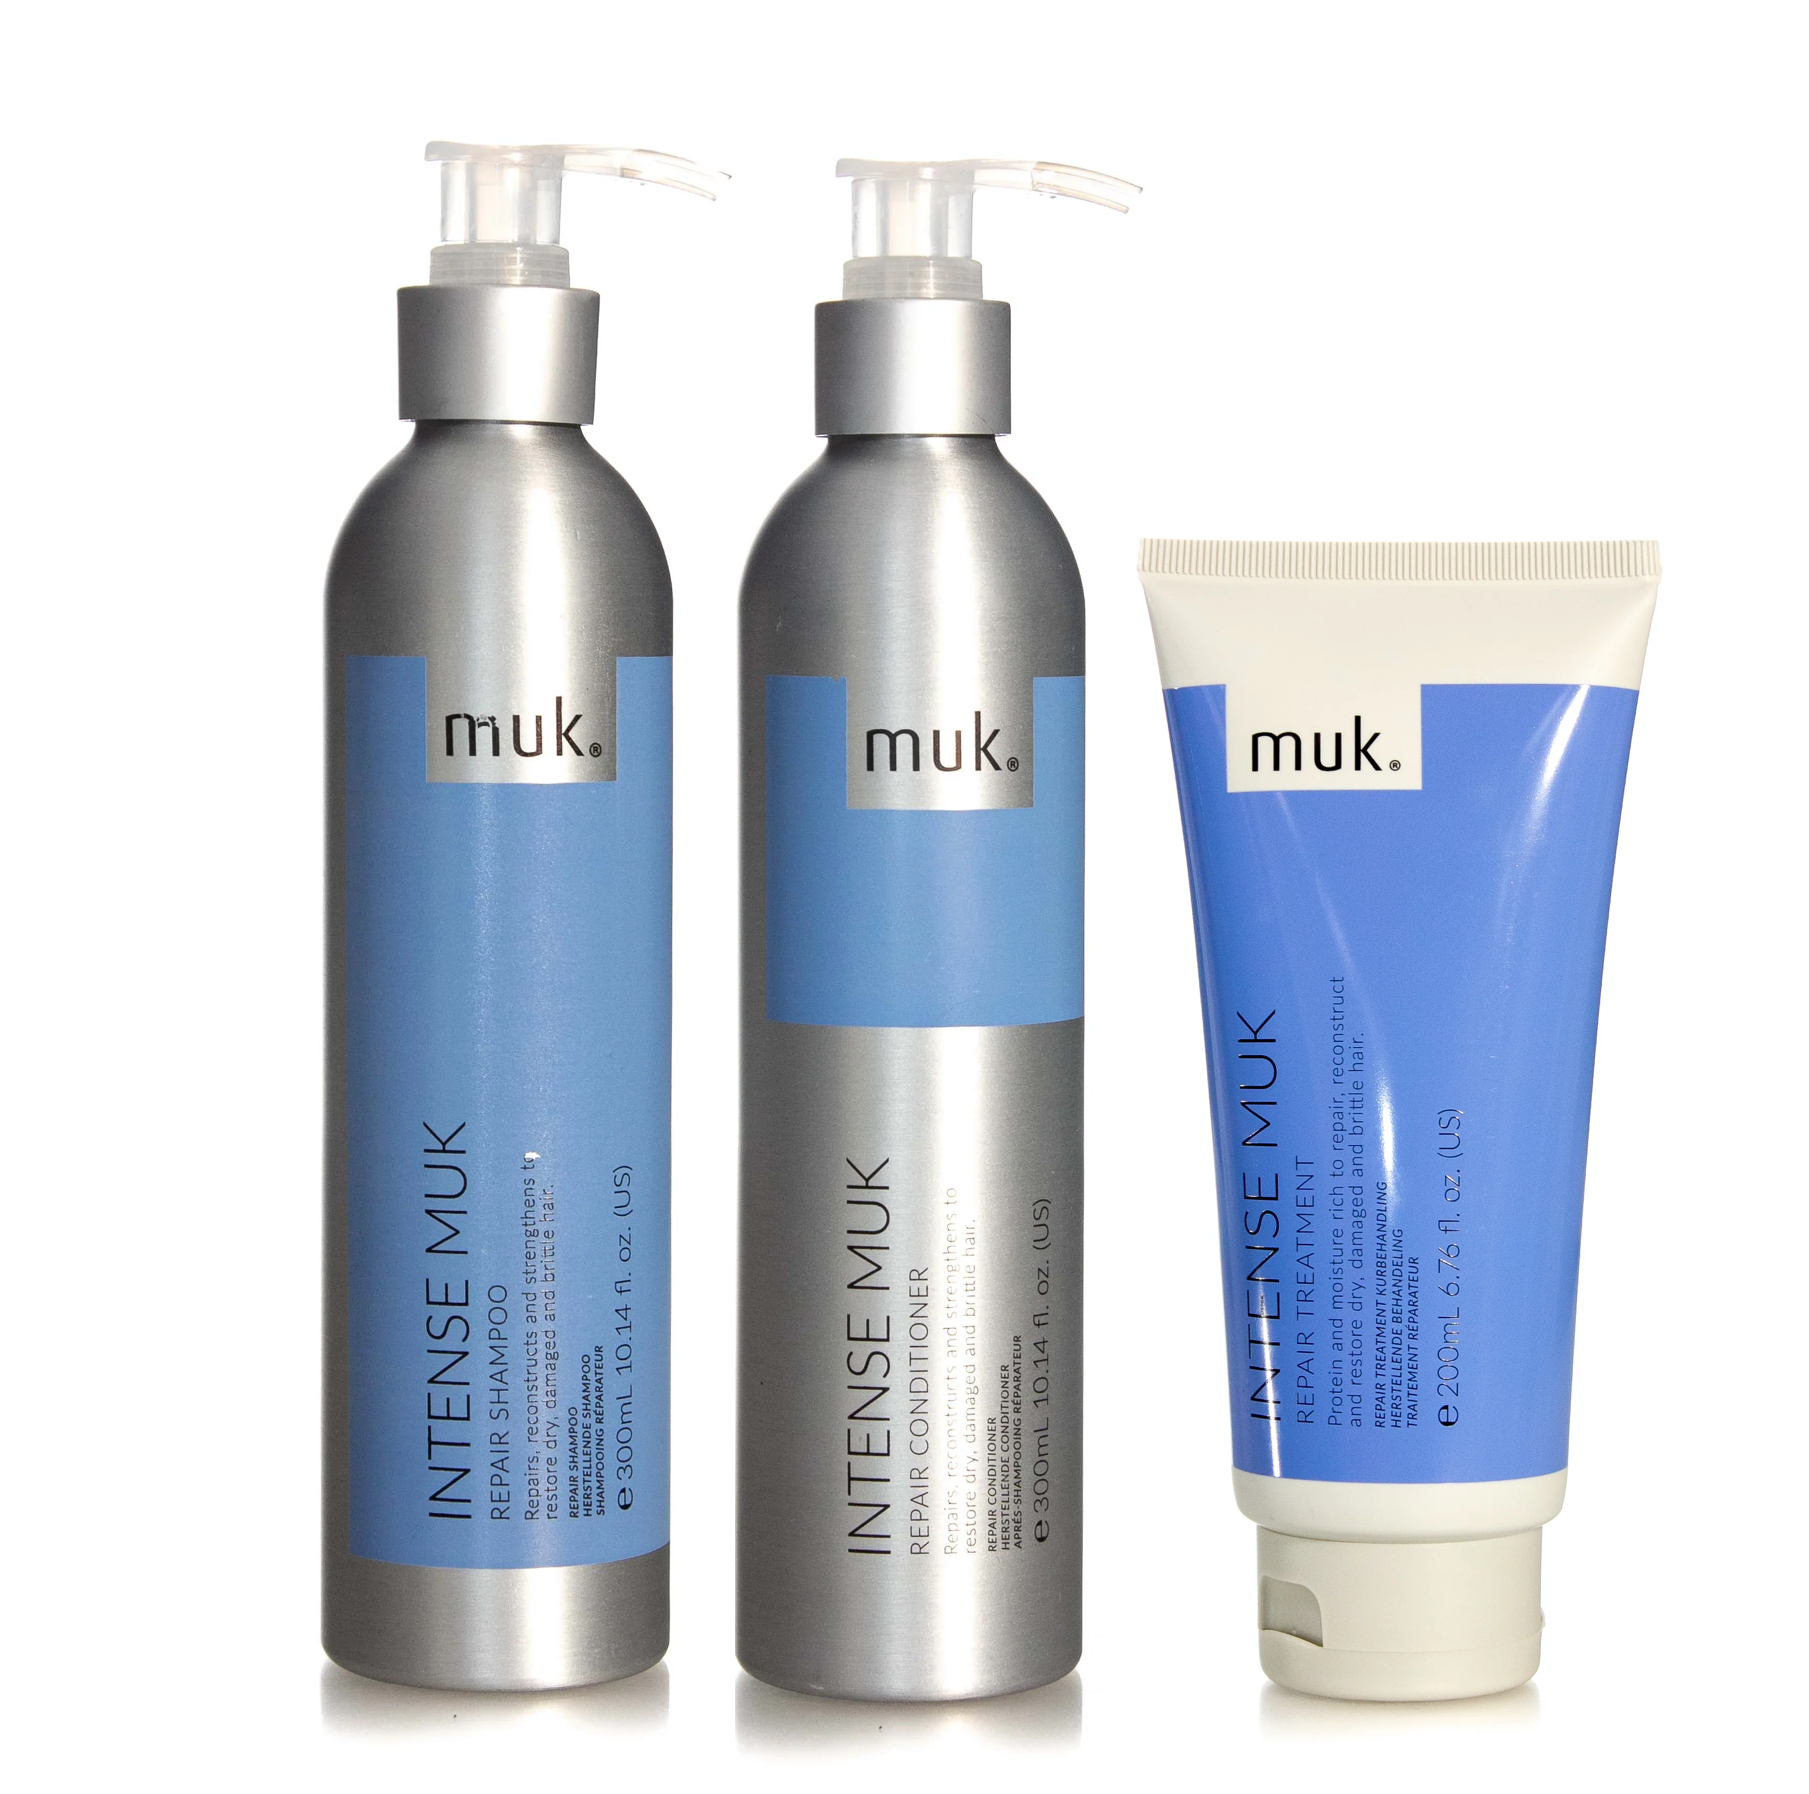 Muk Intense Repair Shampoo and Conditioner 300ml + Repair Treatment 200ml